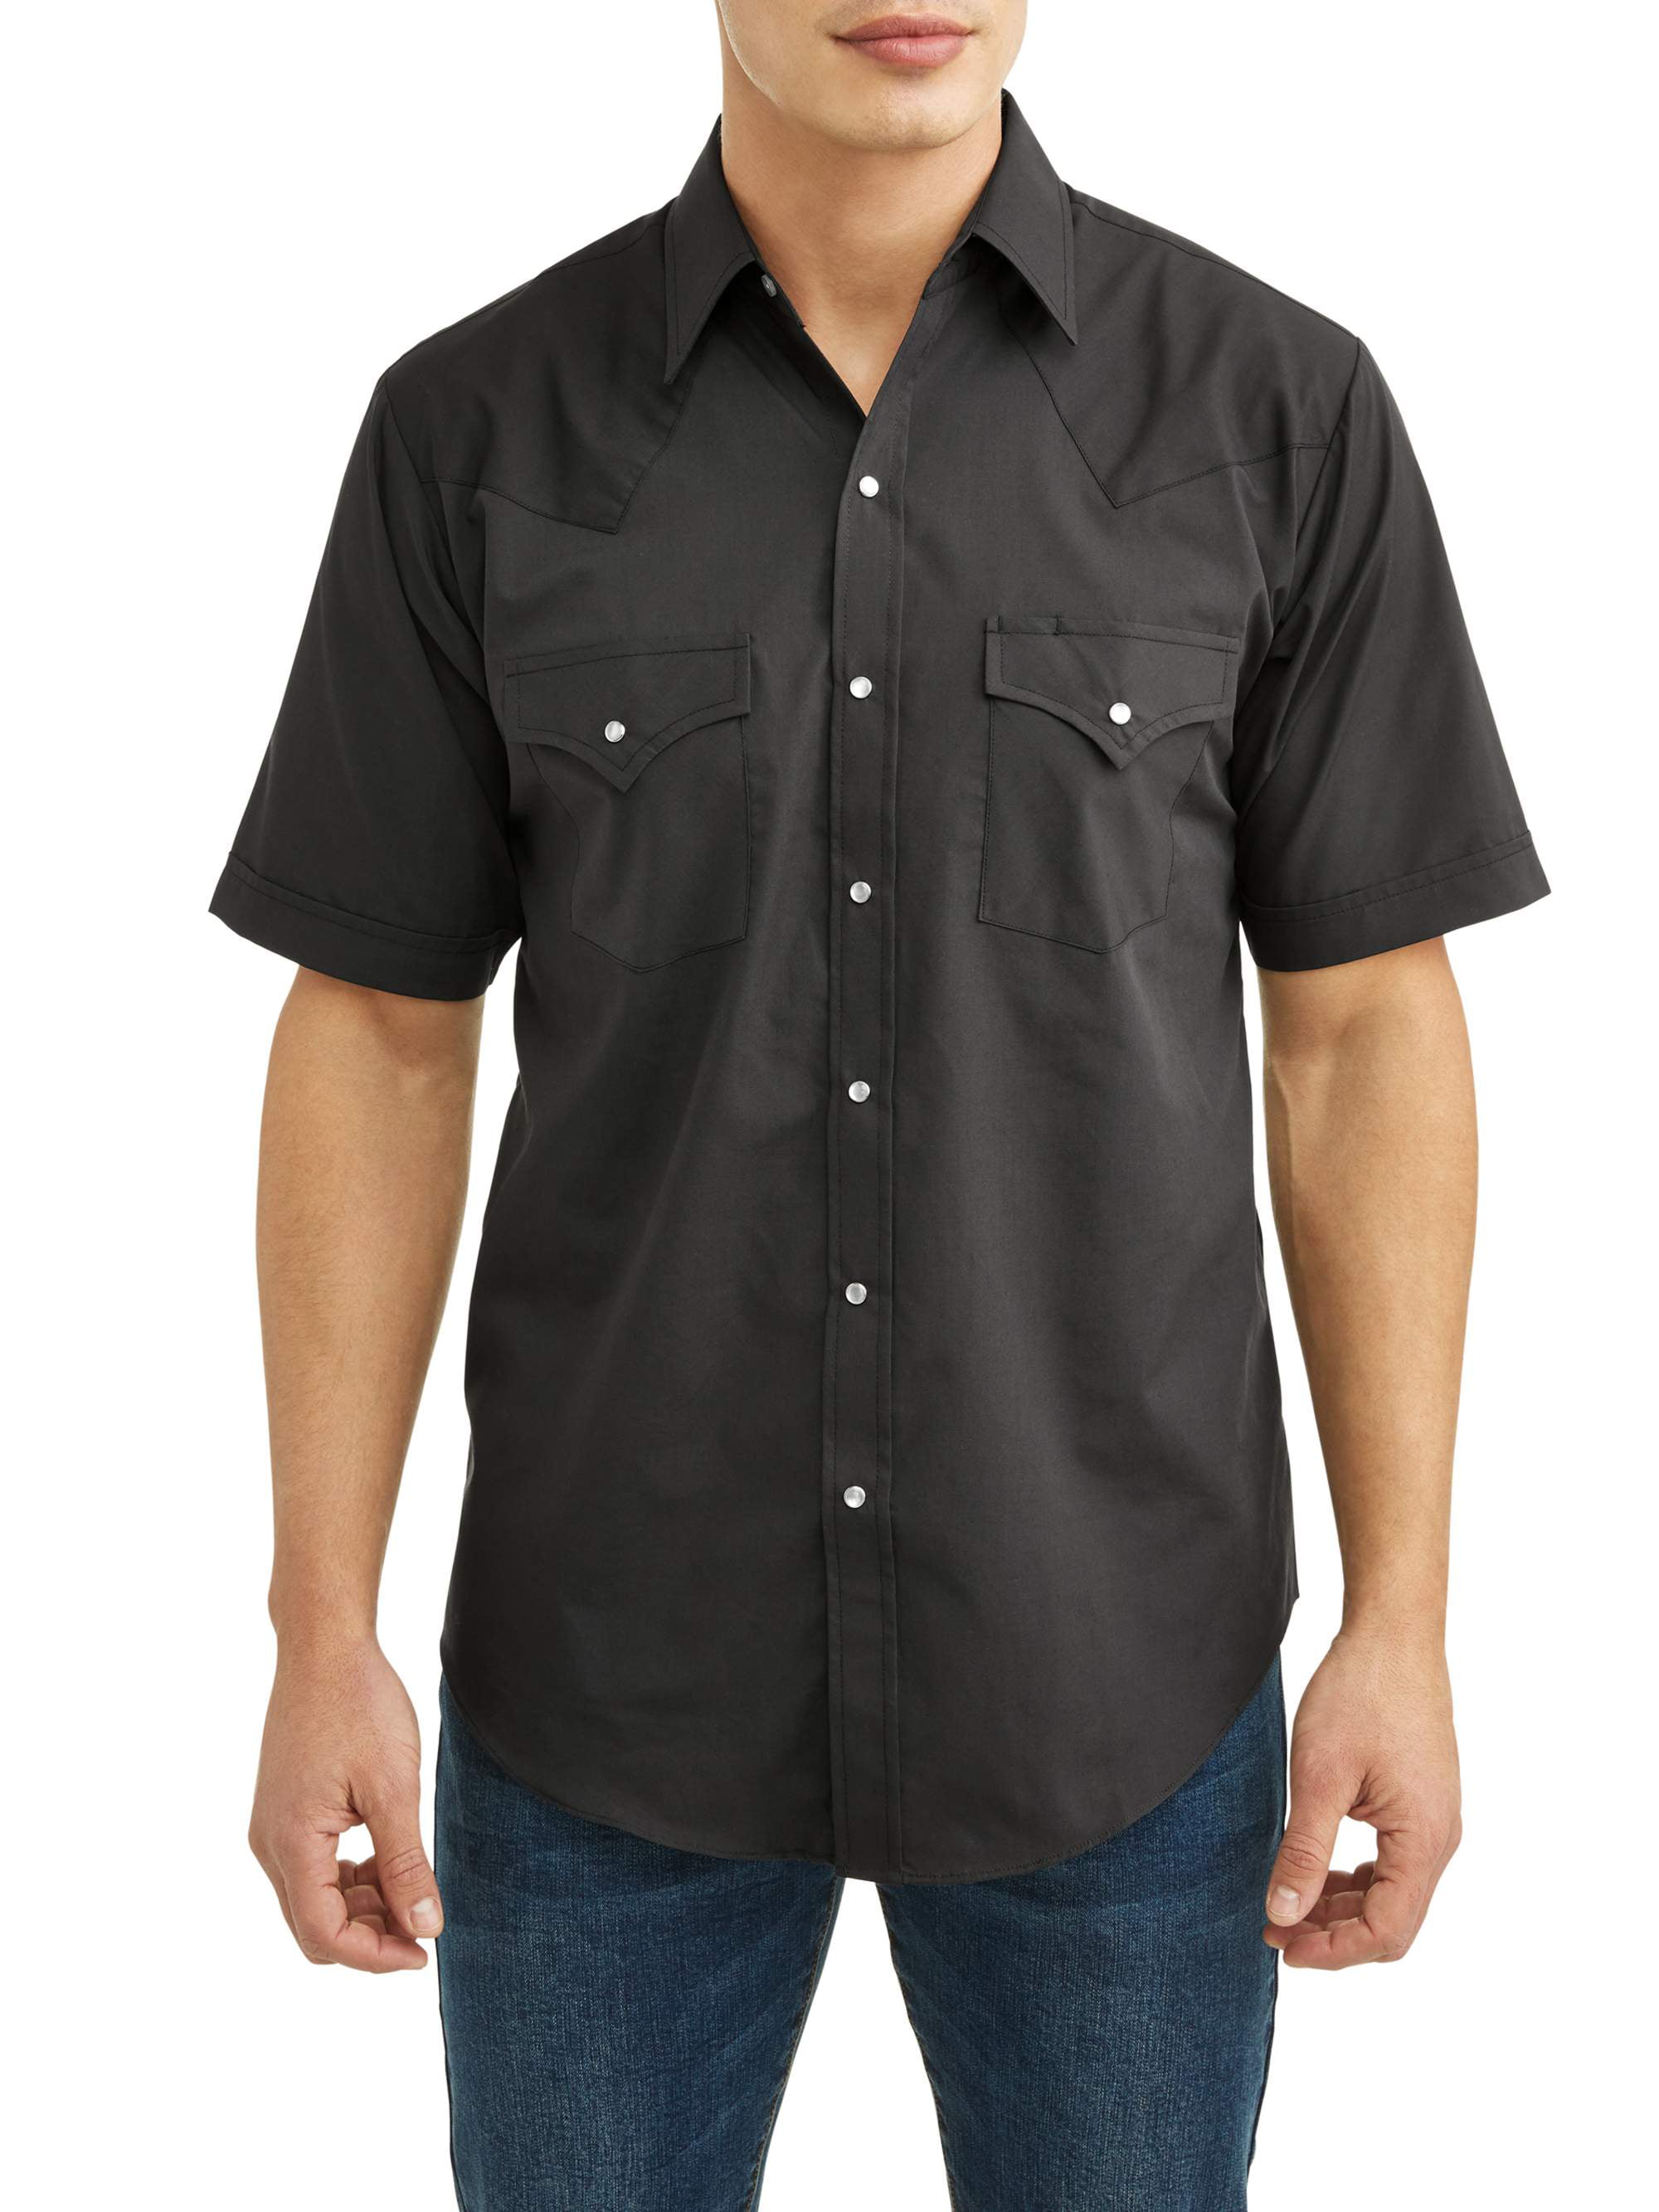 Plains Men's Short Sleeve Solid Western Shirt, up to Size 6XL - Walmart.com